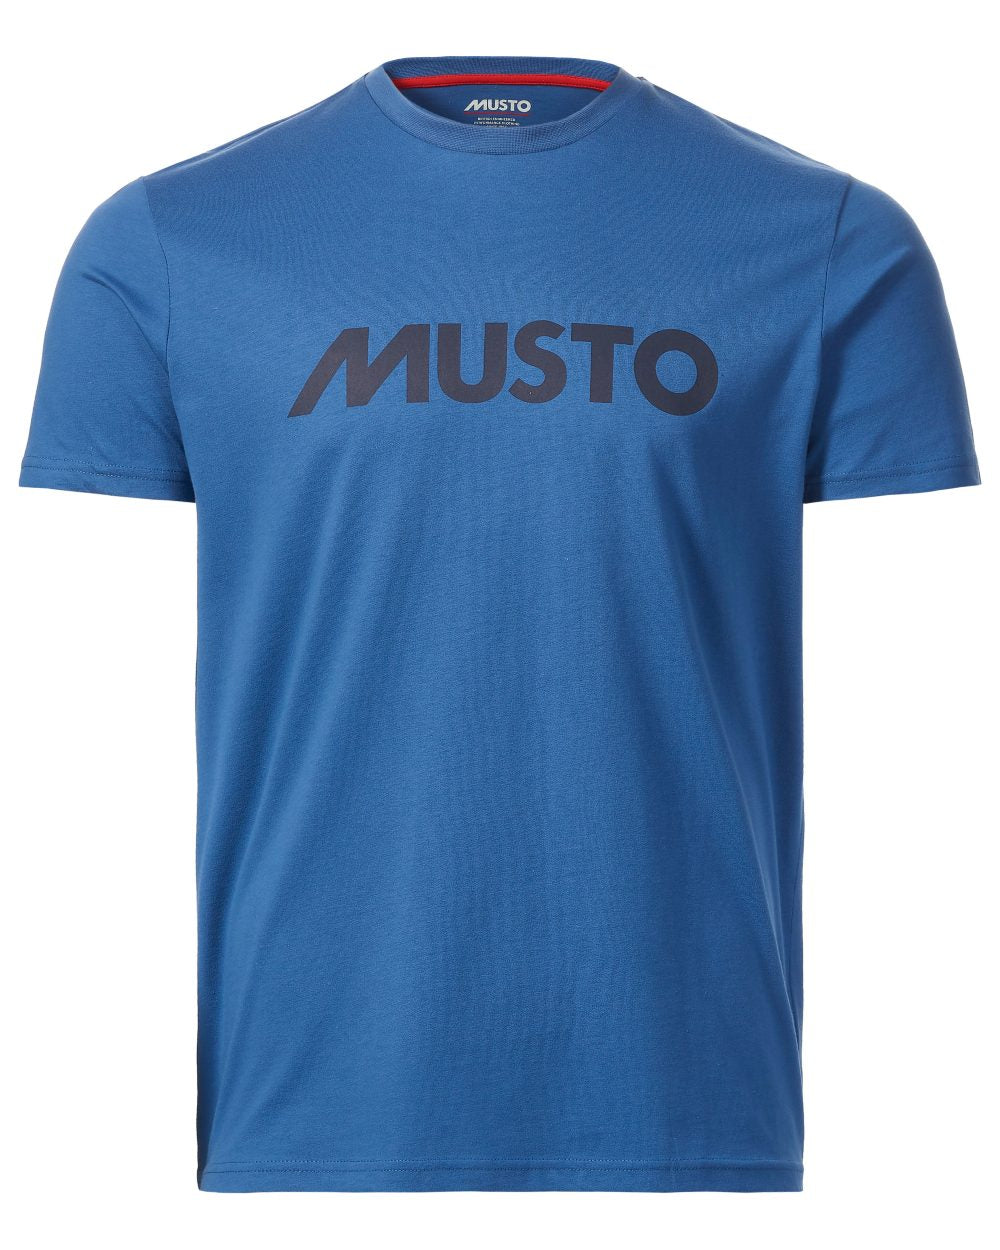 Marine Blue Coloured Musto Logo Tee On A White Background 